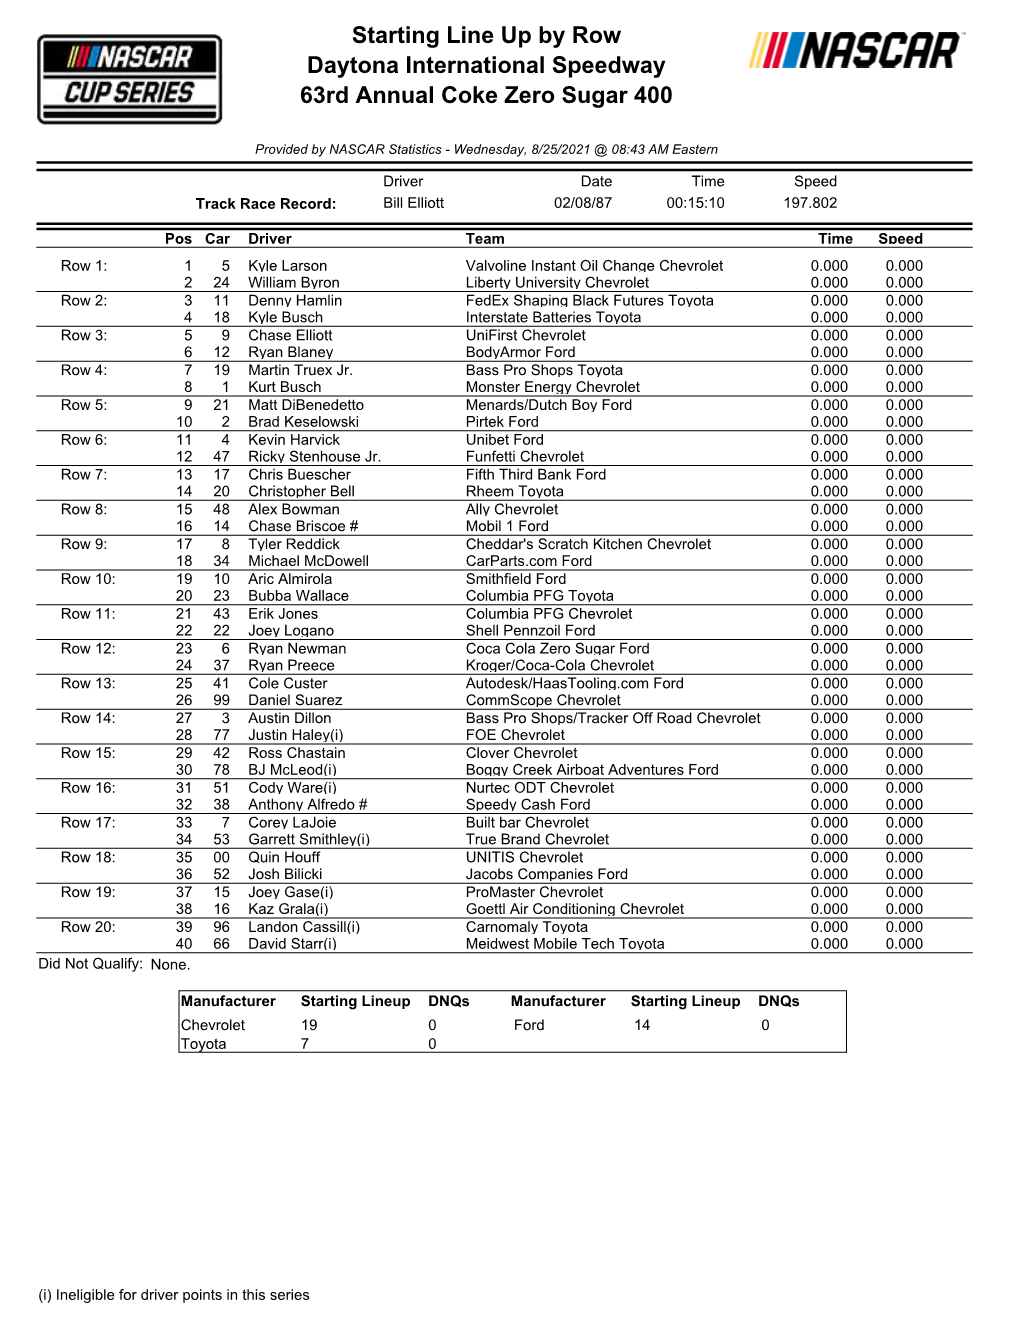 Starting Line up by Row Daytona International Speedway 63Rd Annual Coke Zero Sugar 400